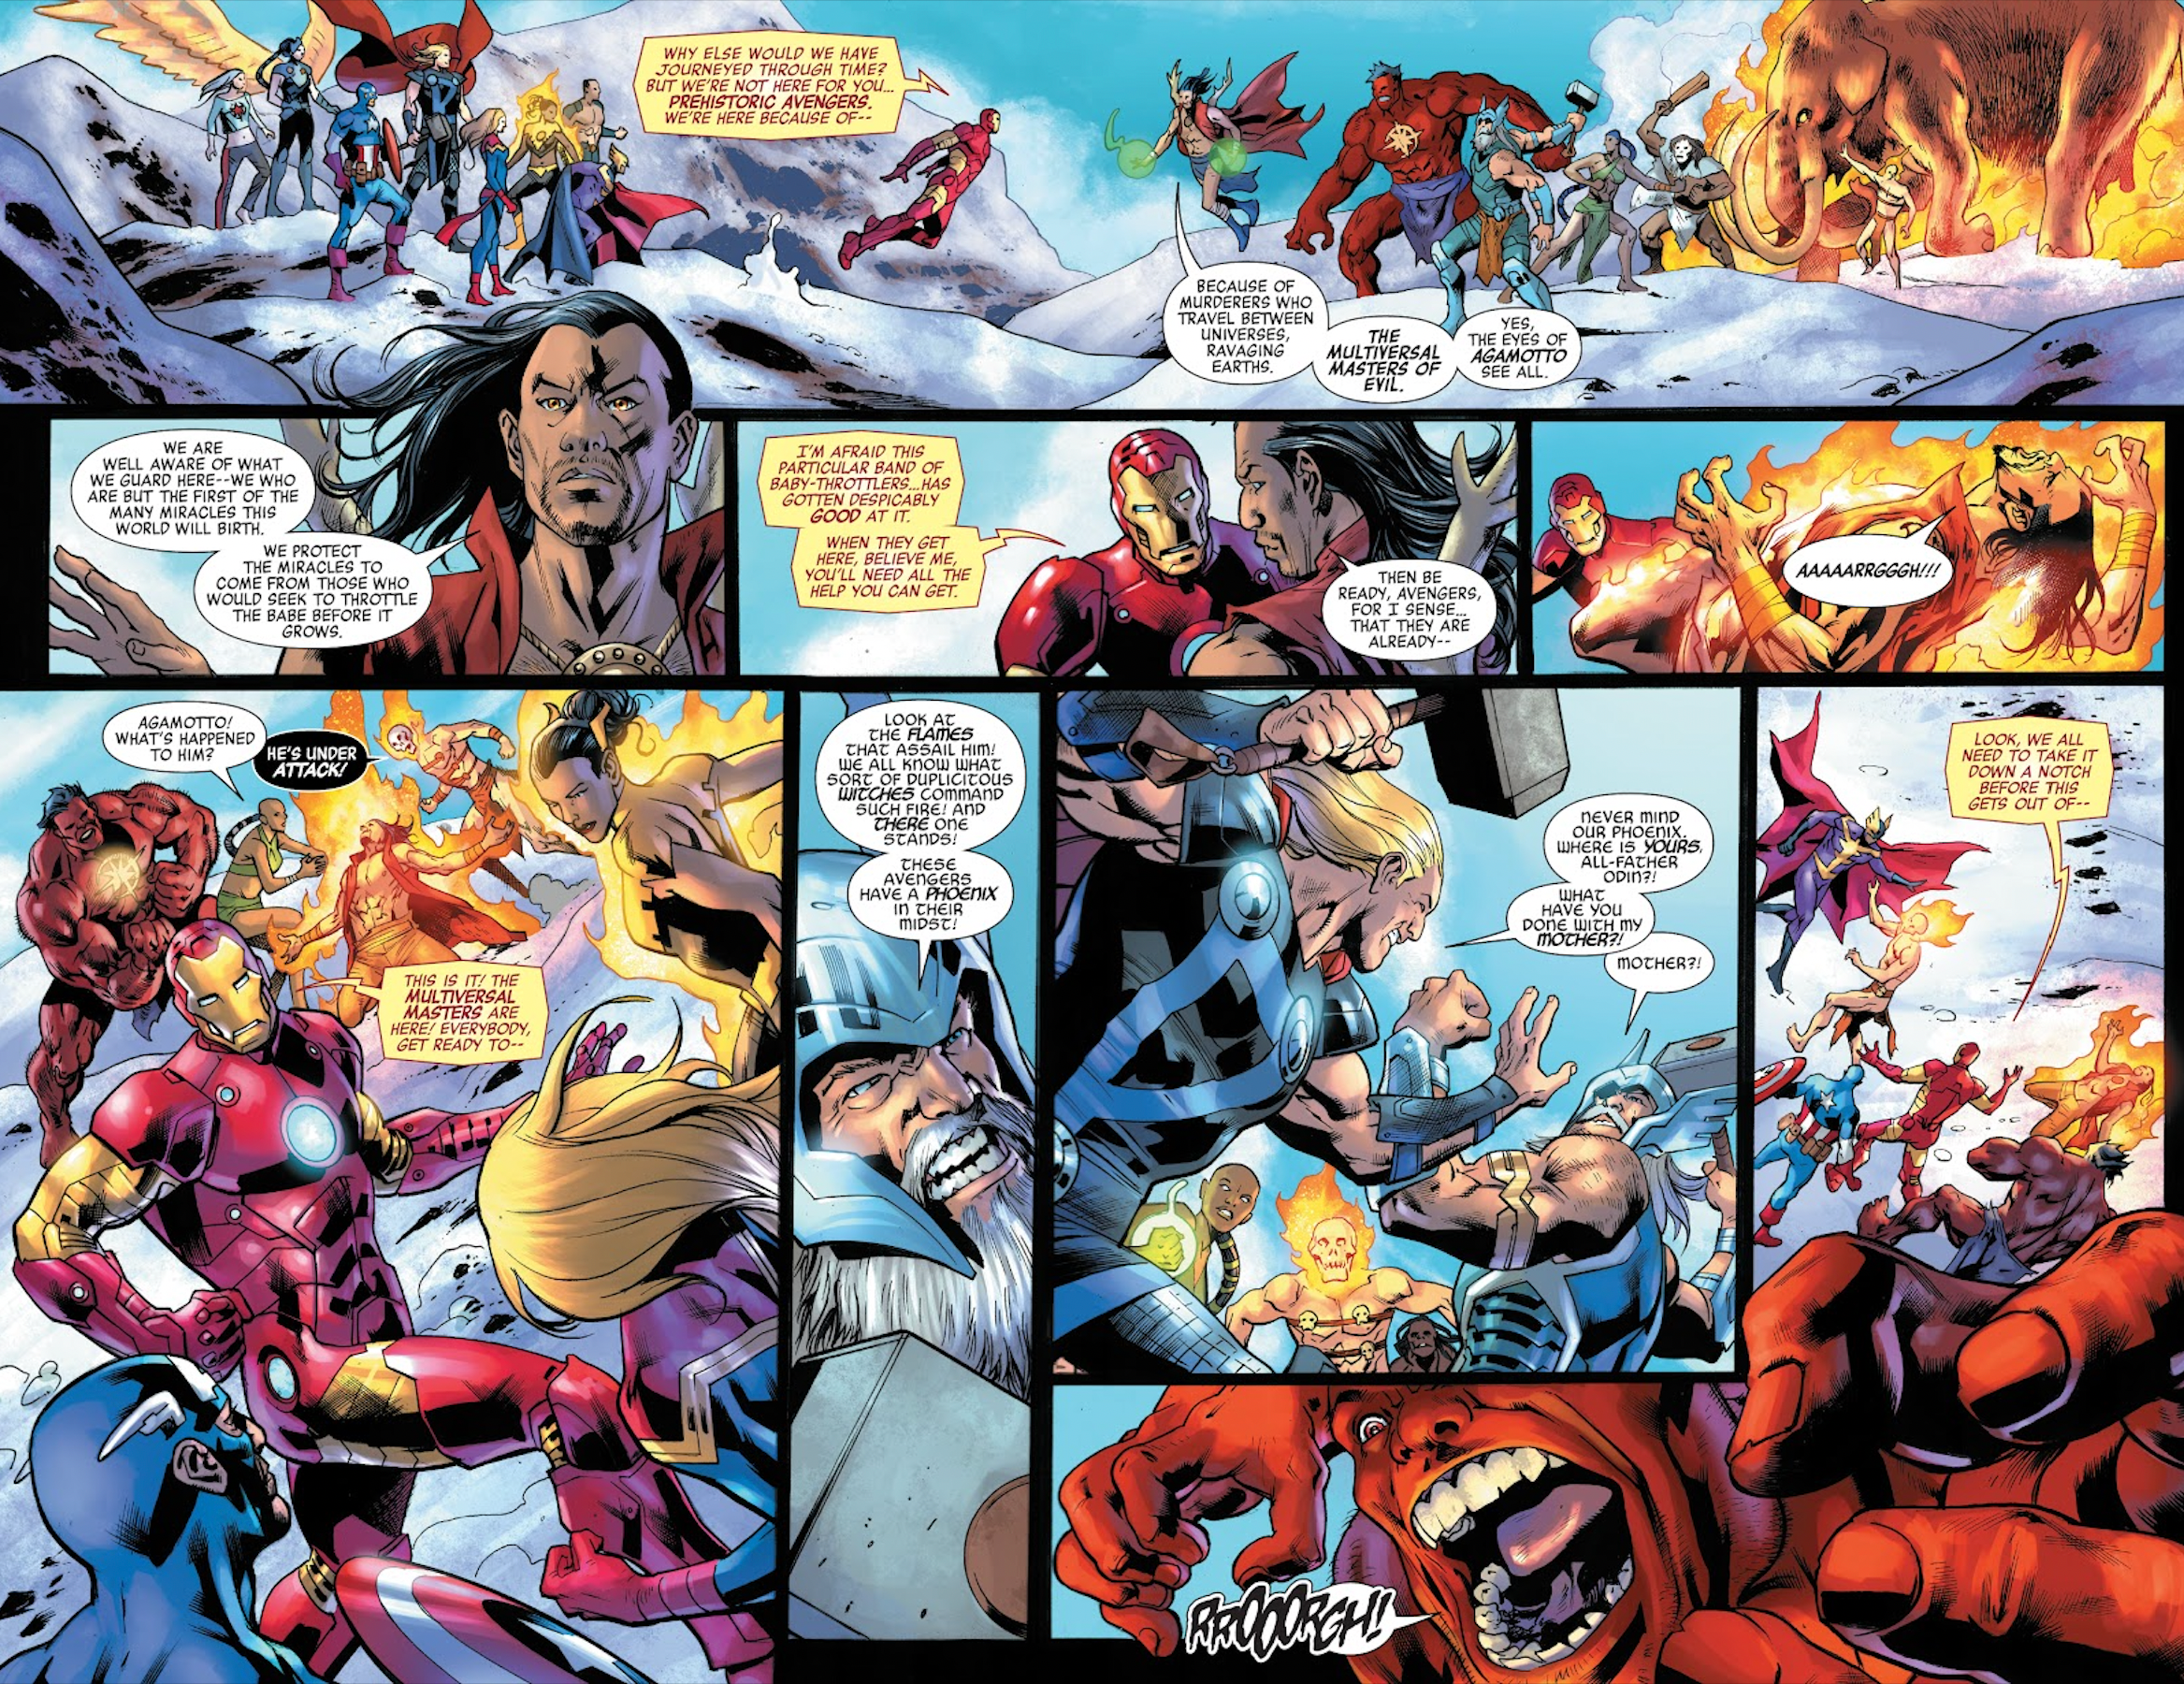 Avengers 616 meet their prehistoric team